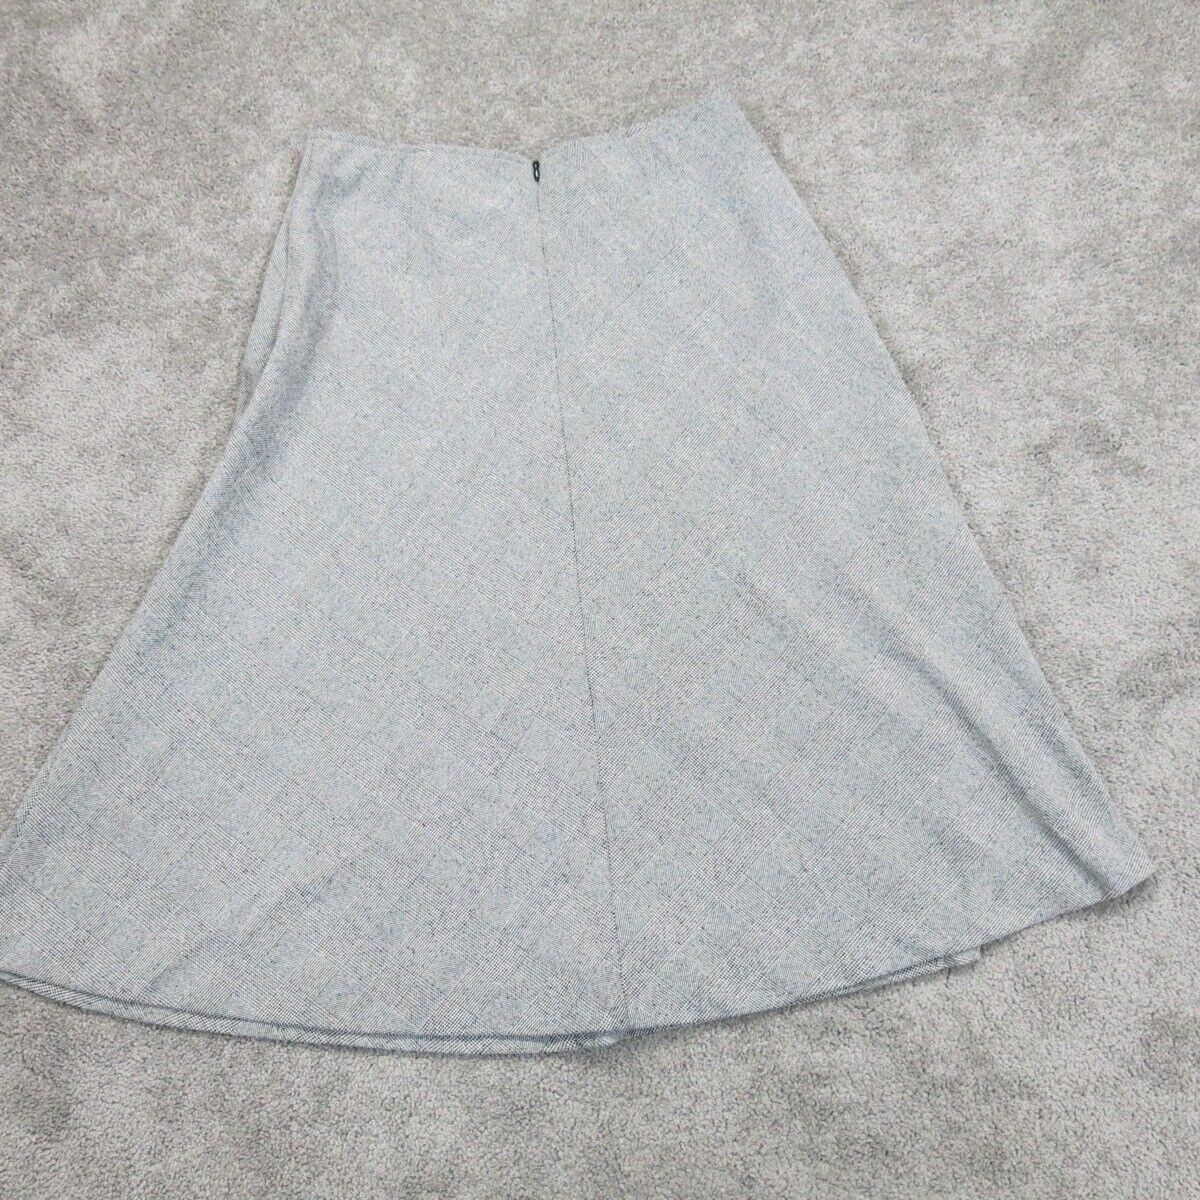 H&M Womens Straight & Pencil Midi Skirt Flat Front Pull On Black White SZ US 10